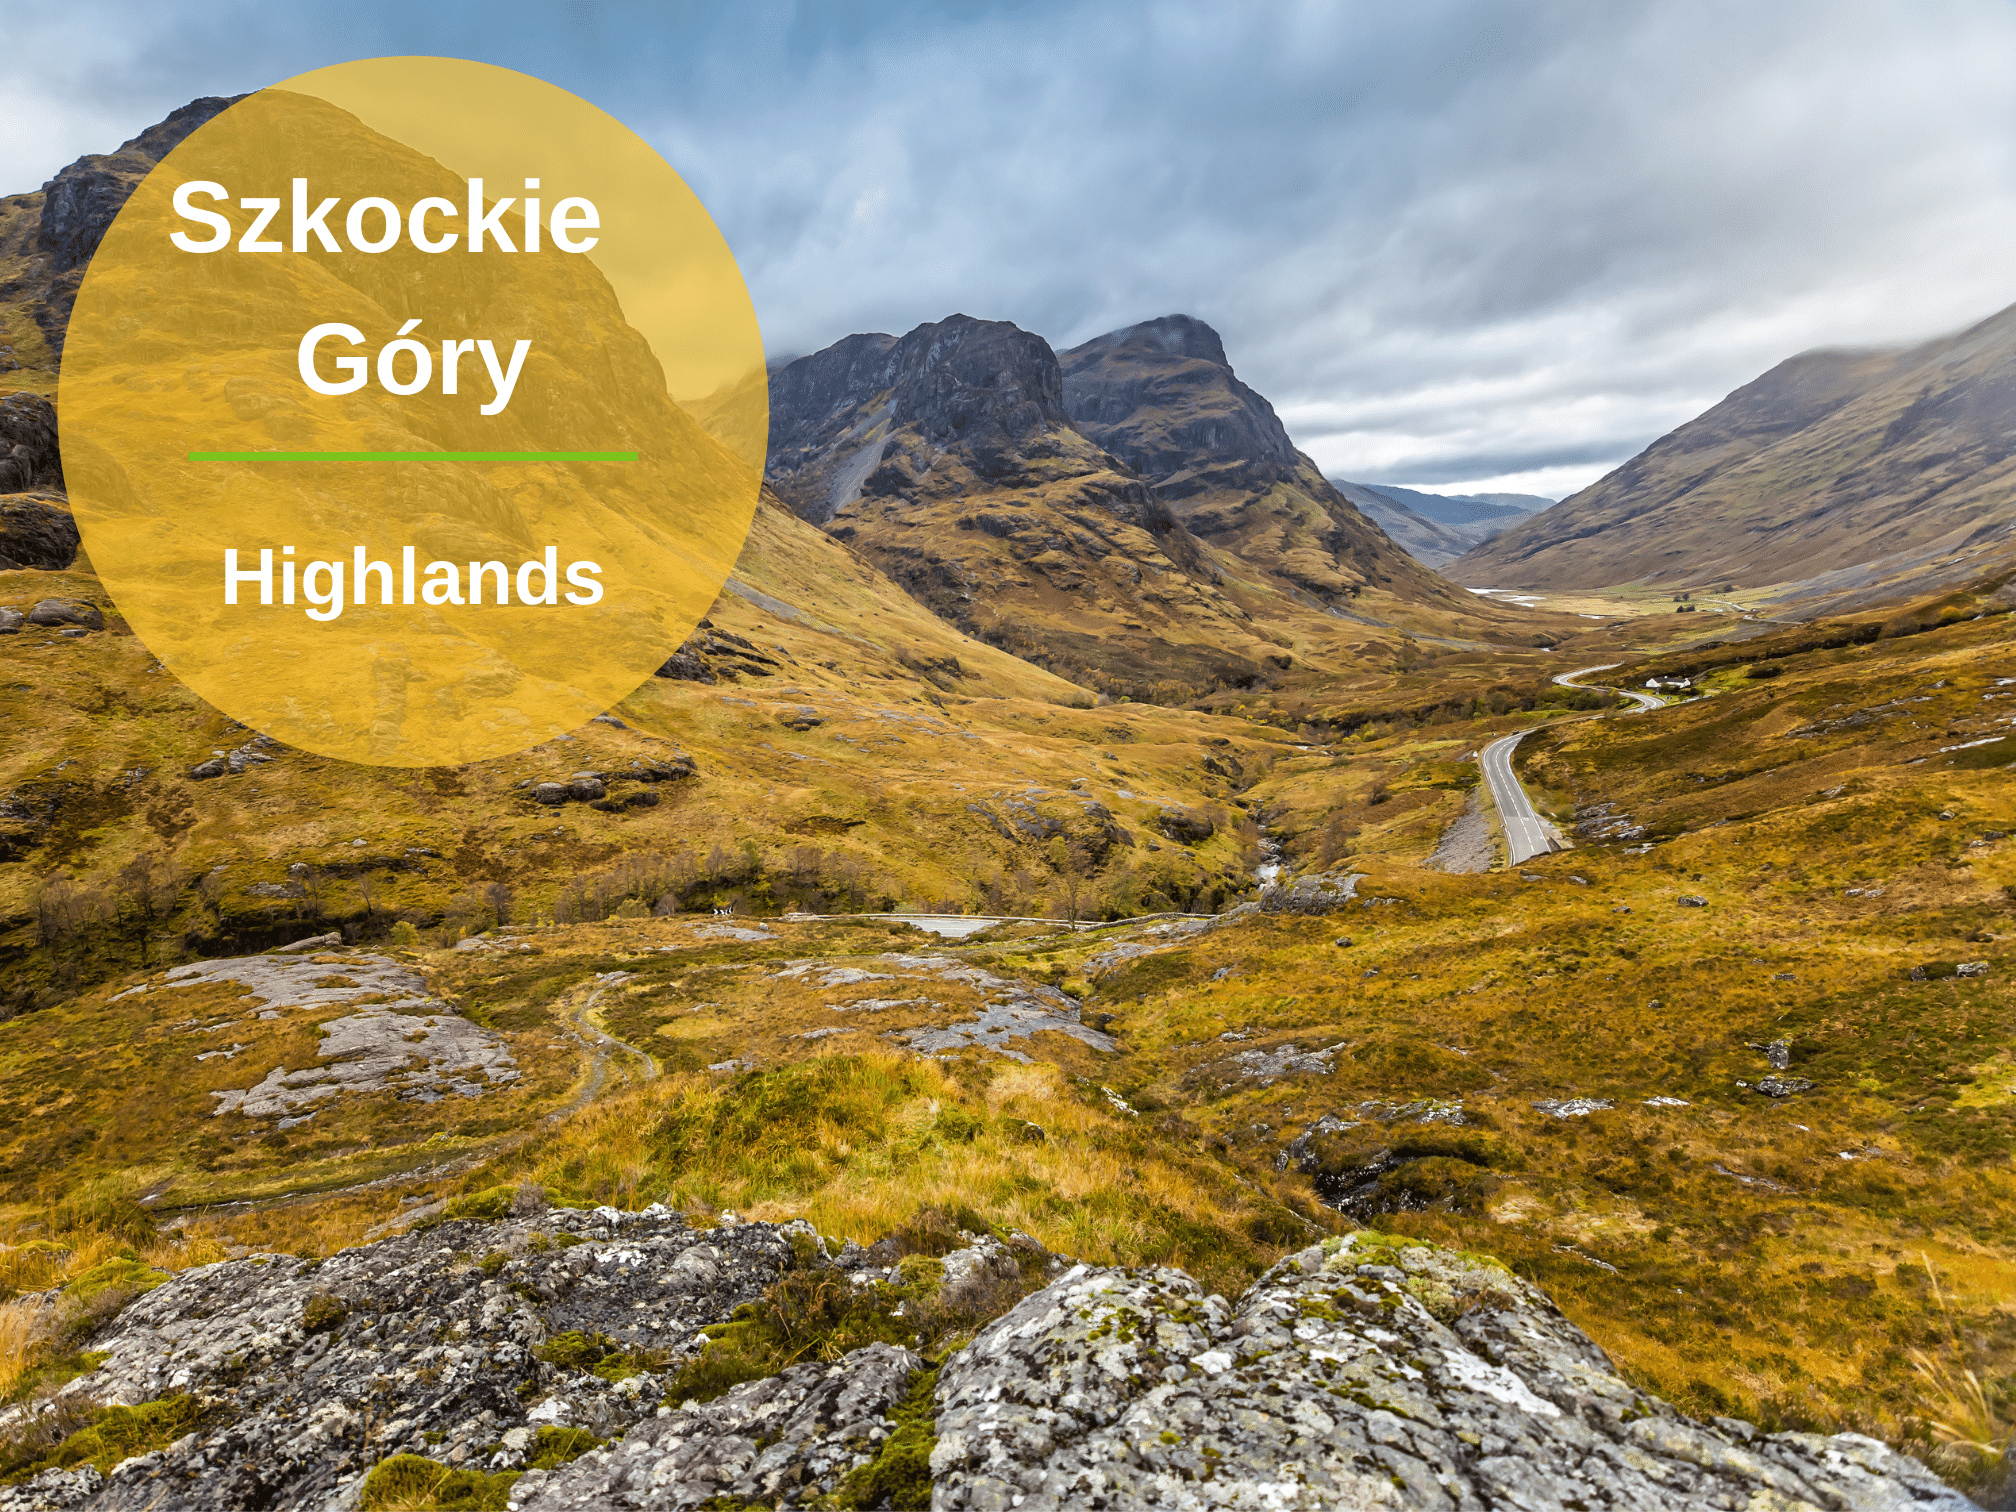 Szkockie Góry Highlands